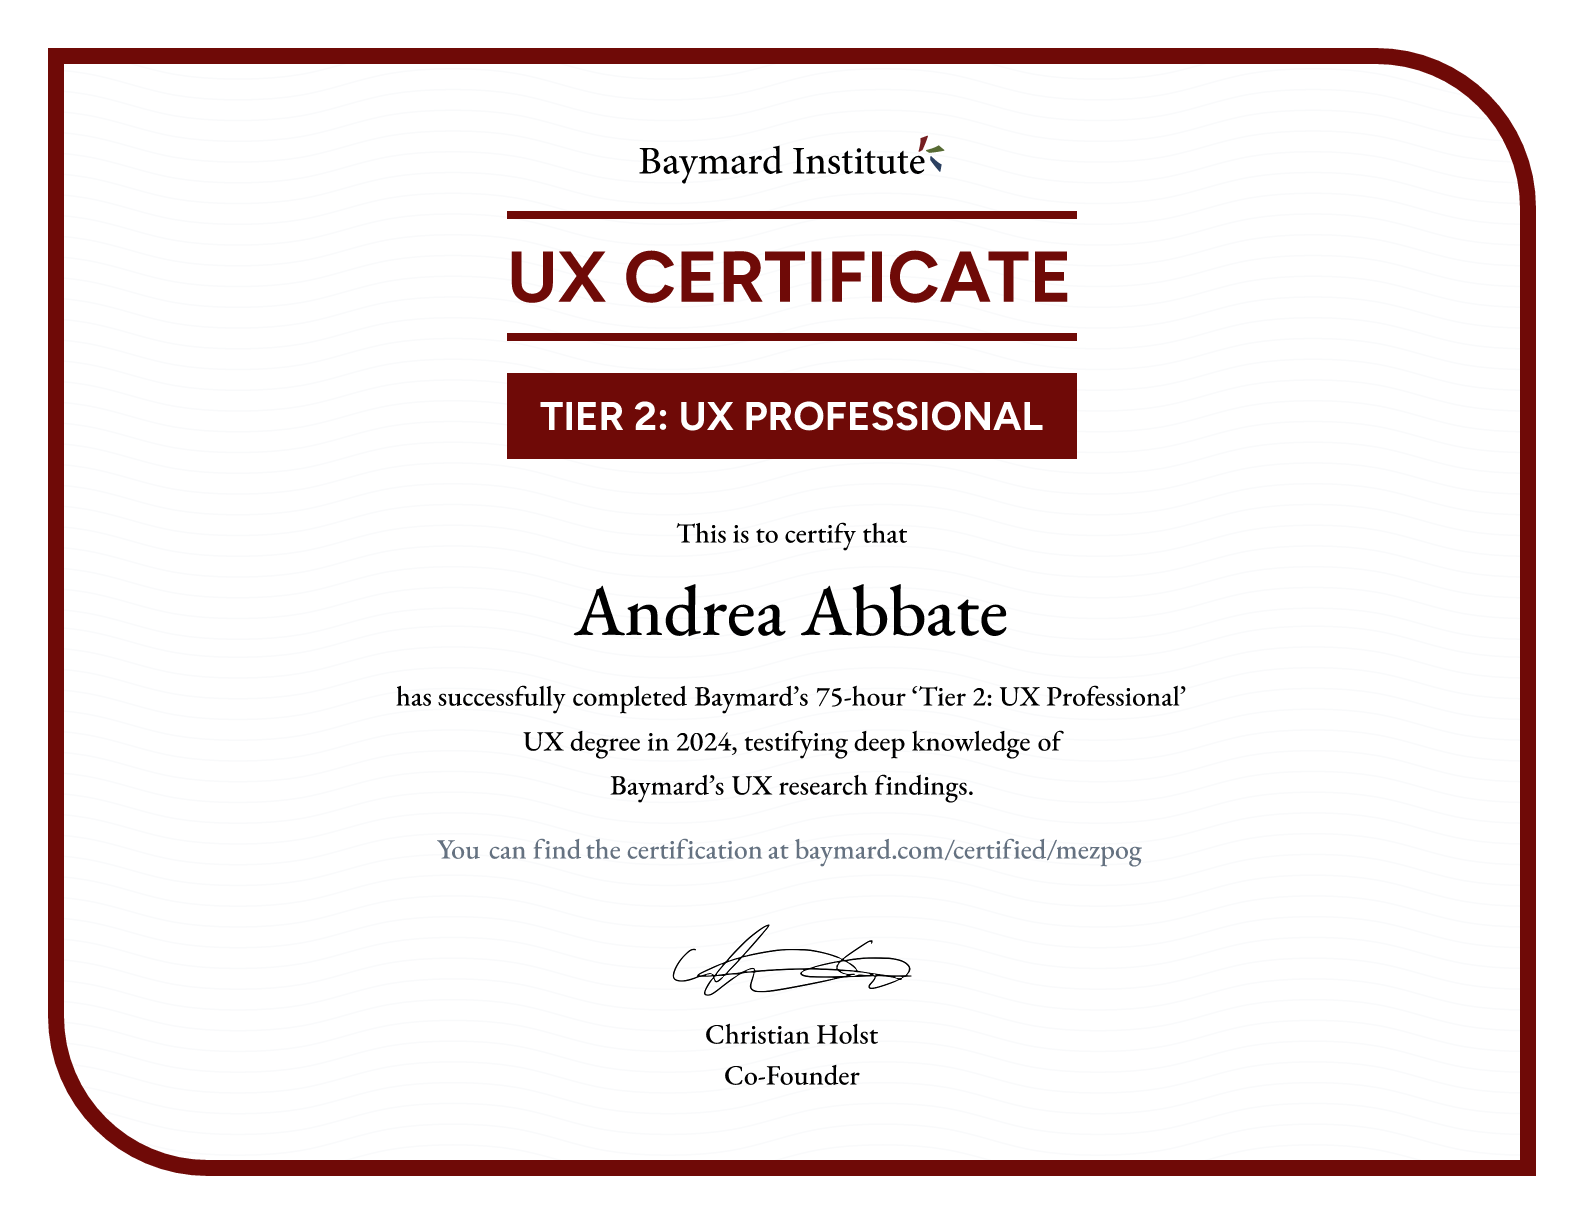 Andrea Abbate’s certificate